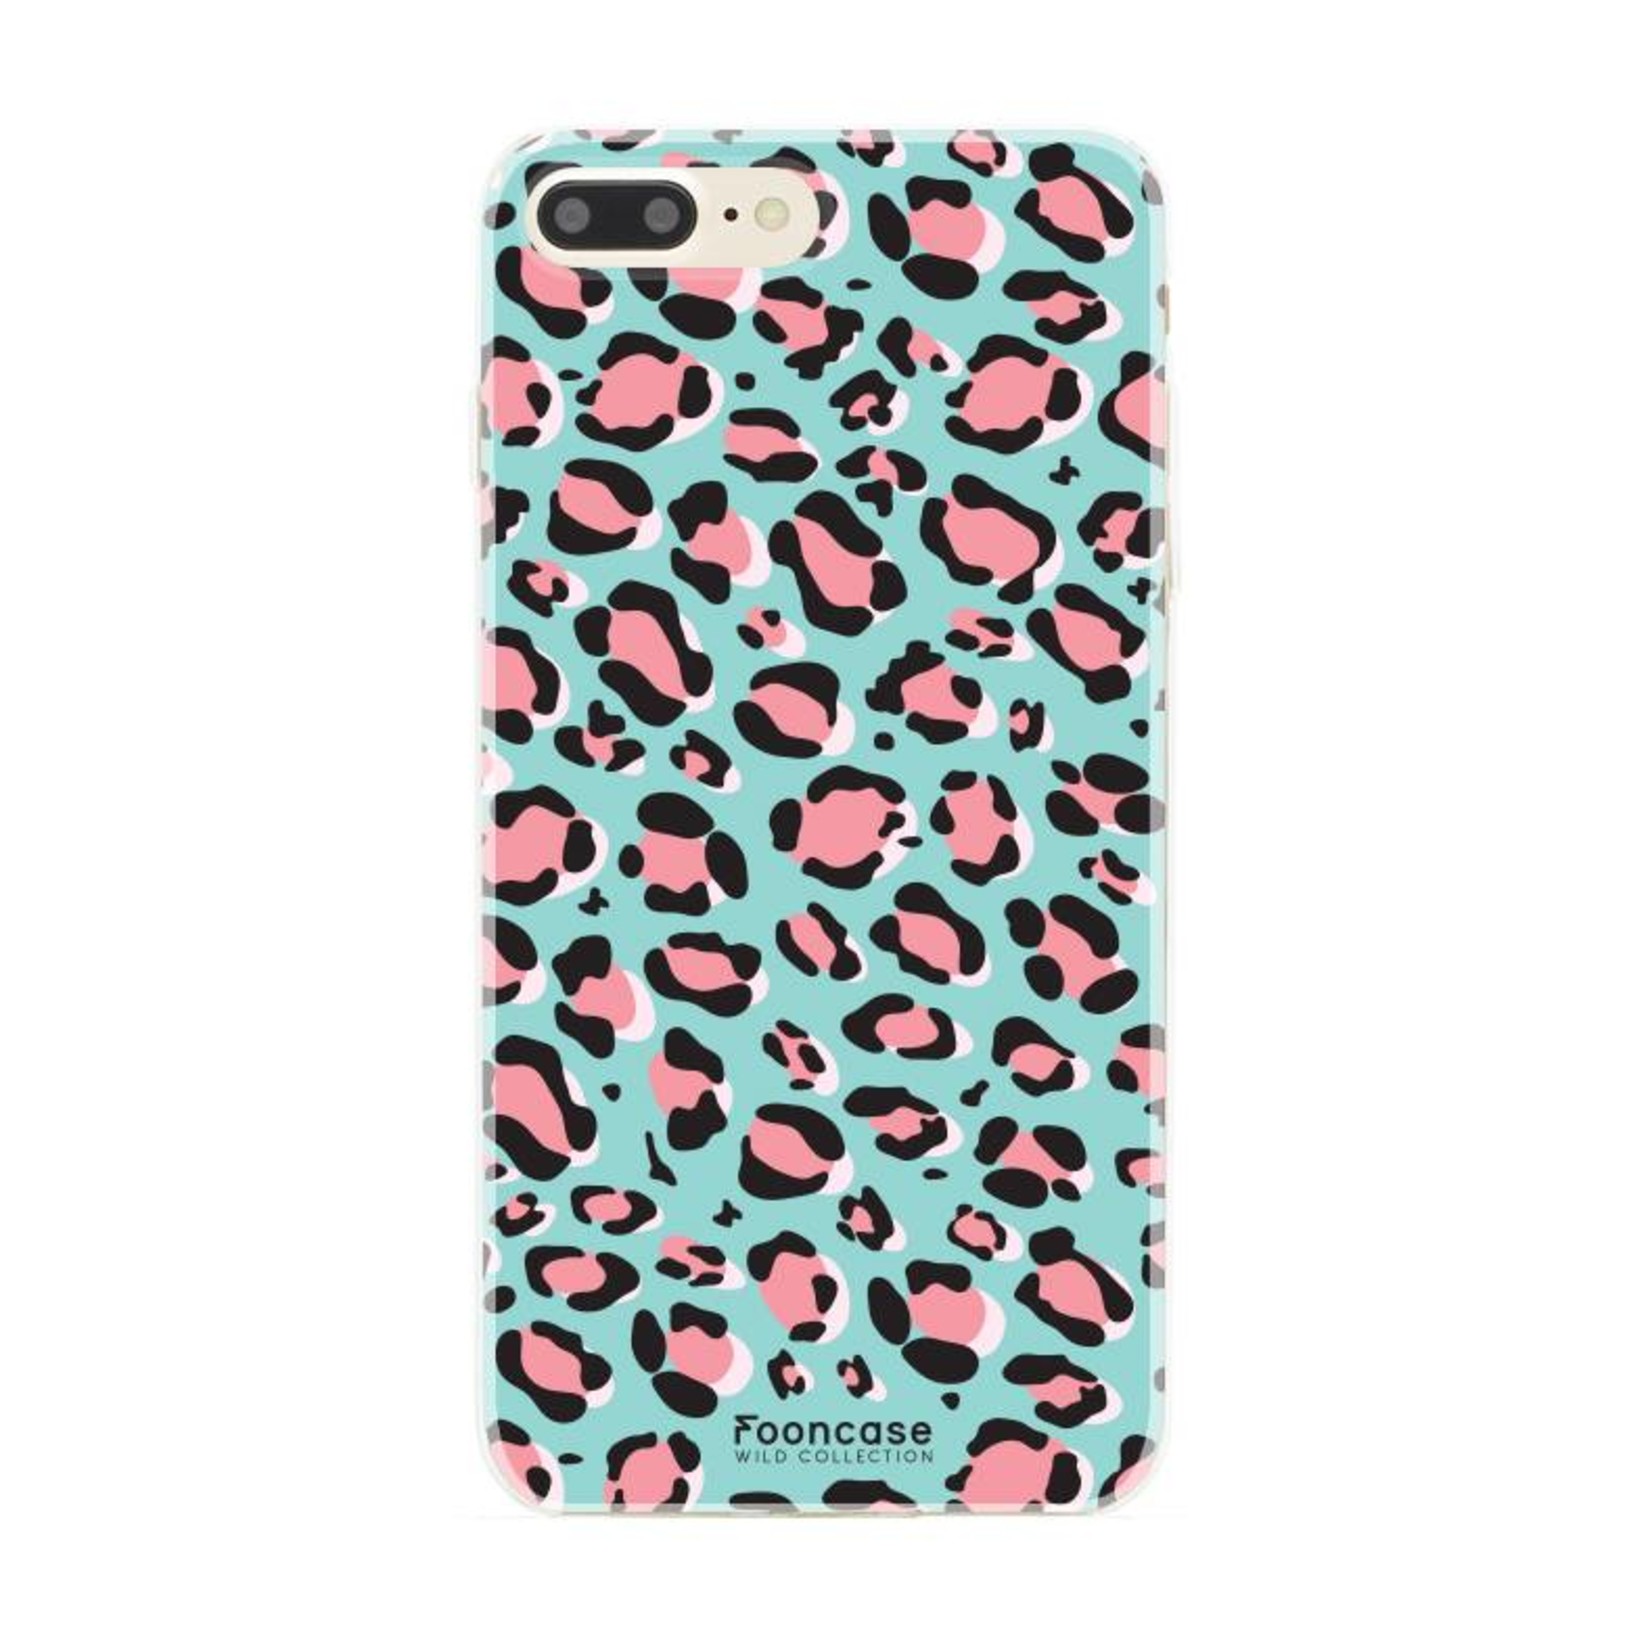 FOONCASE iPhone 8 Plus hoesje TPU Soft Case - Back Cover - Luipaard / Leopard print / Blauw